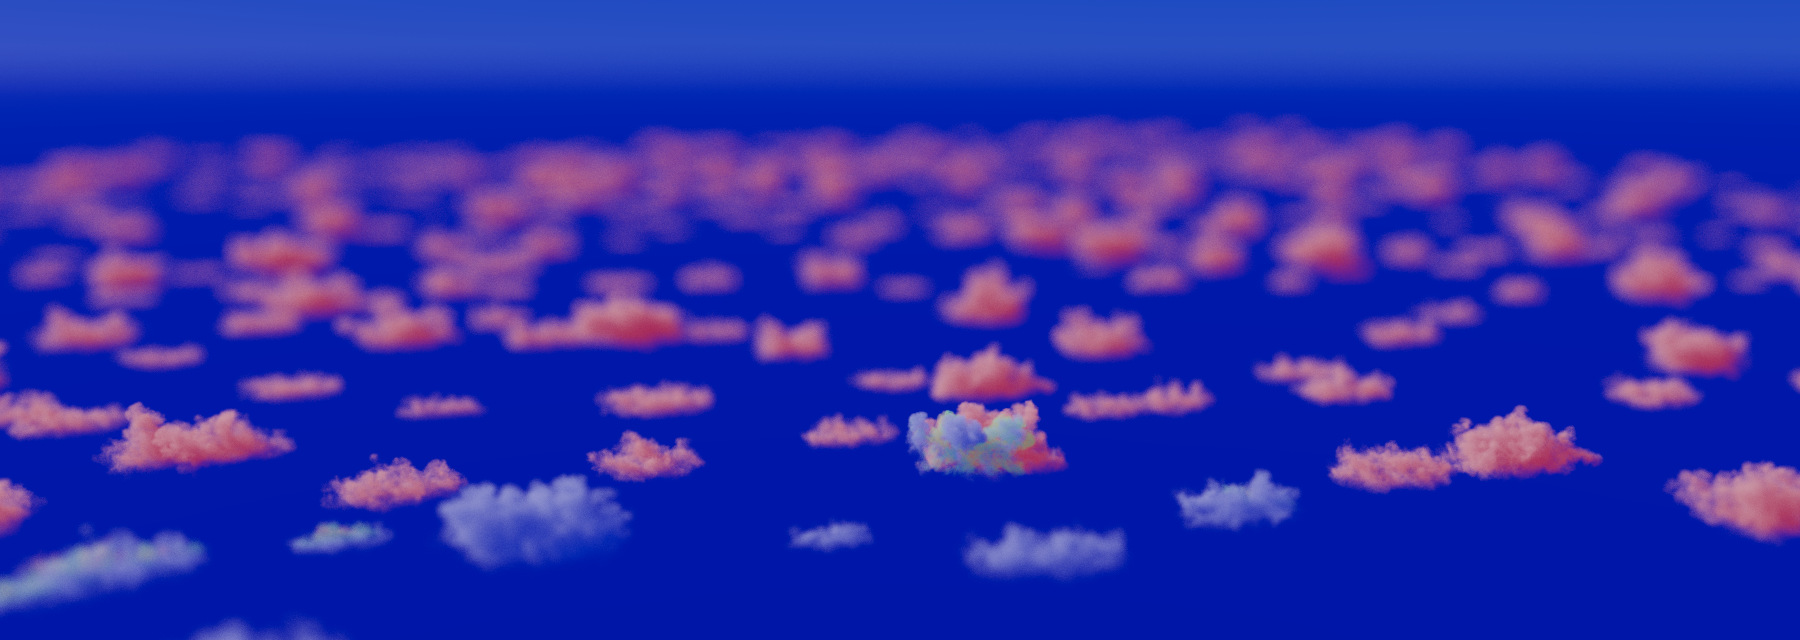 DOF visualization for a cloud scene